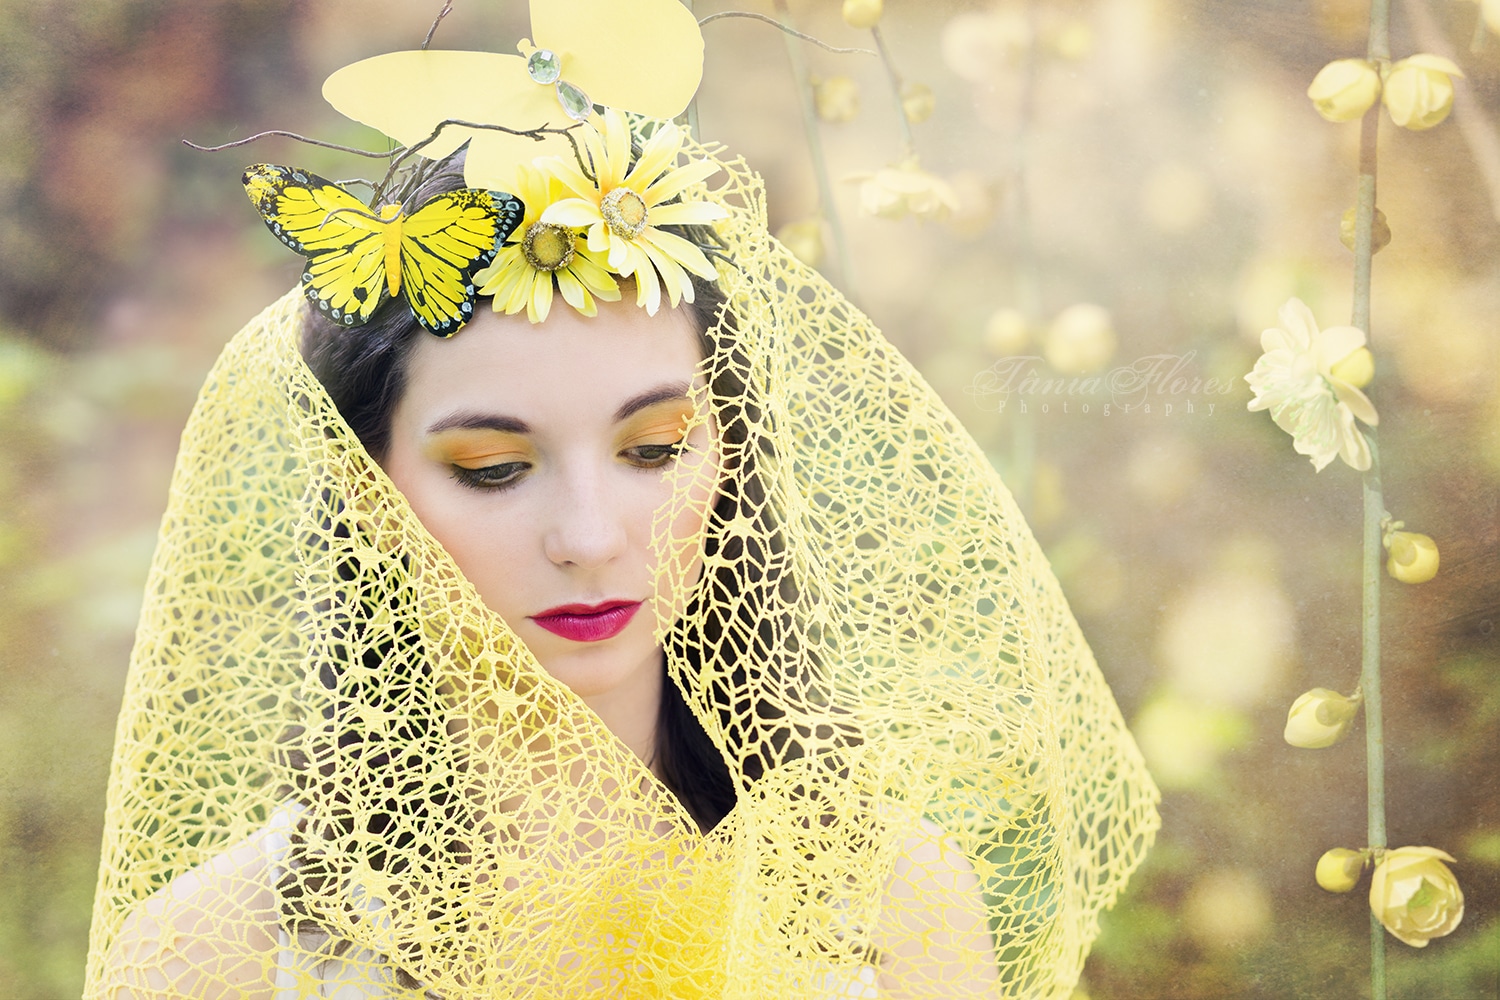 Tania-Flores-Photography-portrait-hello-yellow-4